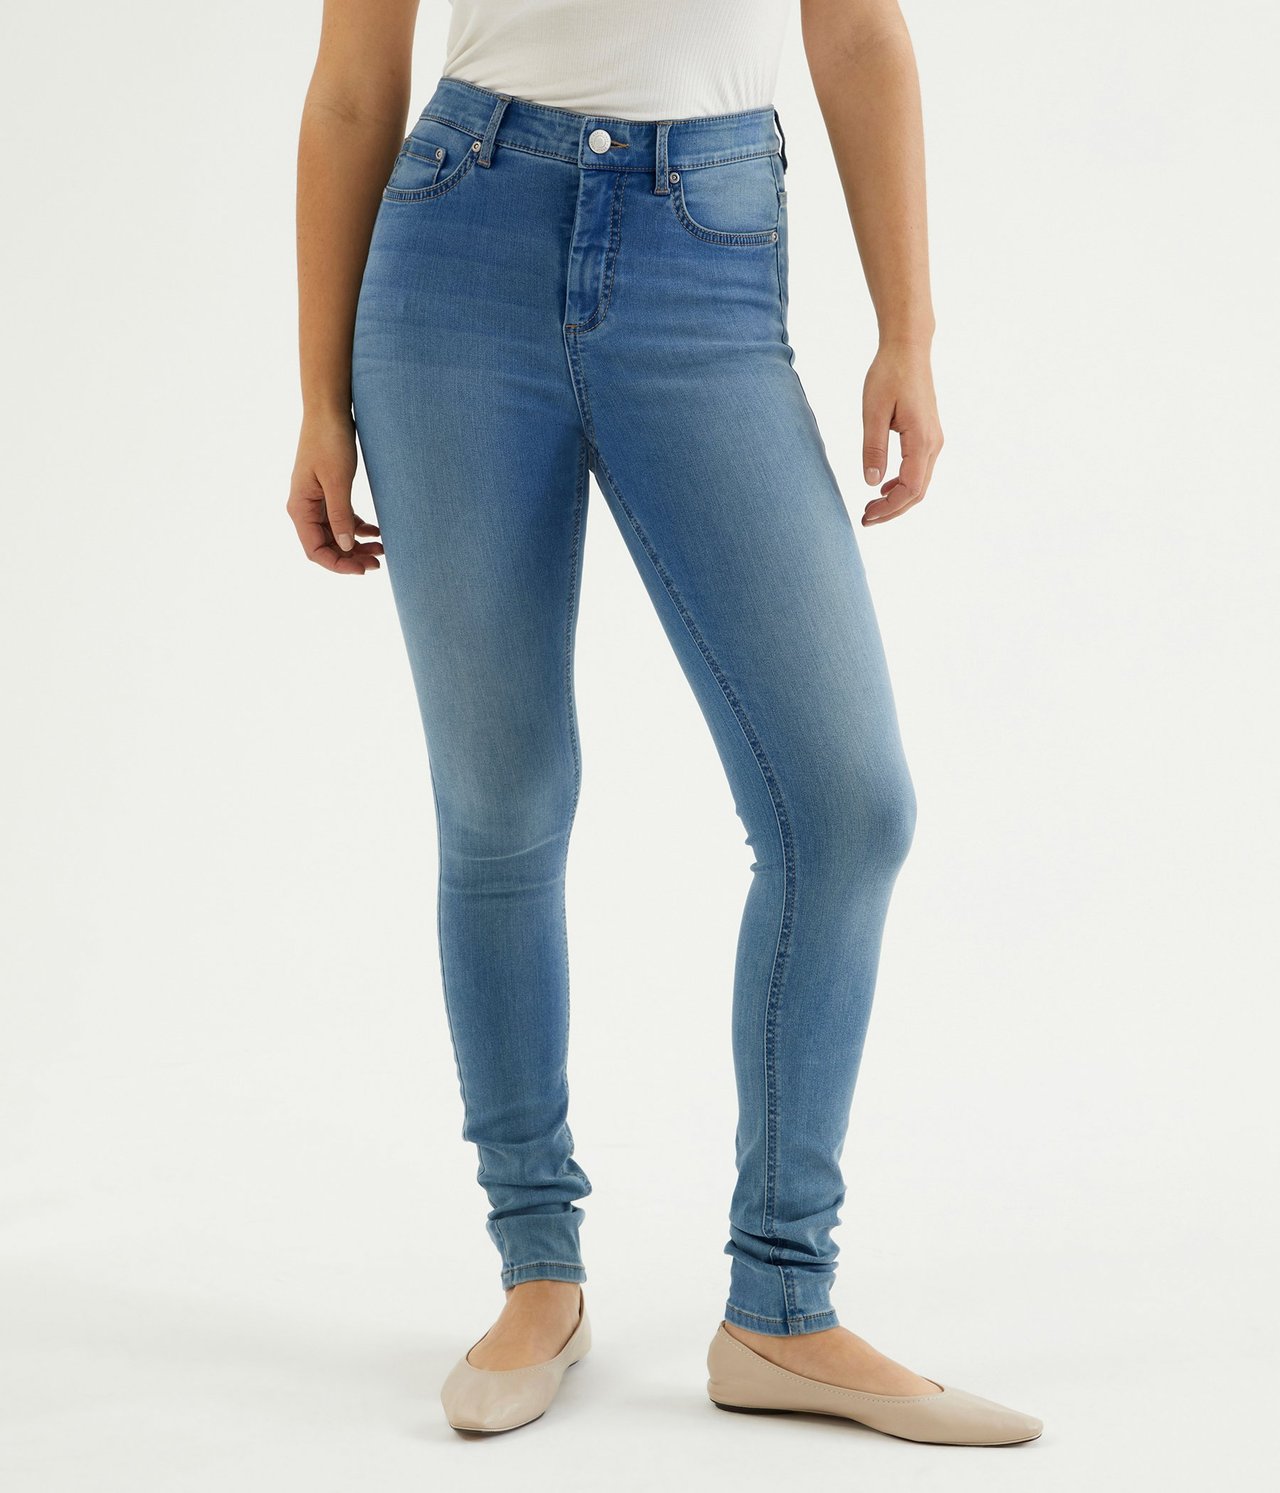 Super slim jeans extra long leg Denim - null - 4